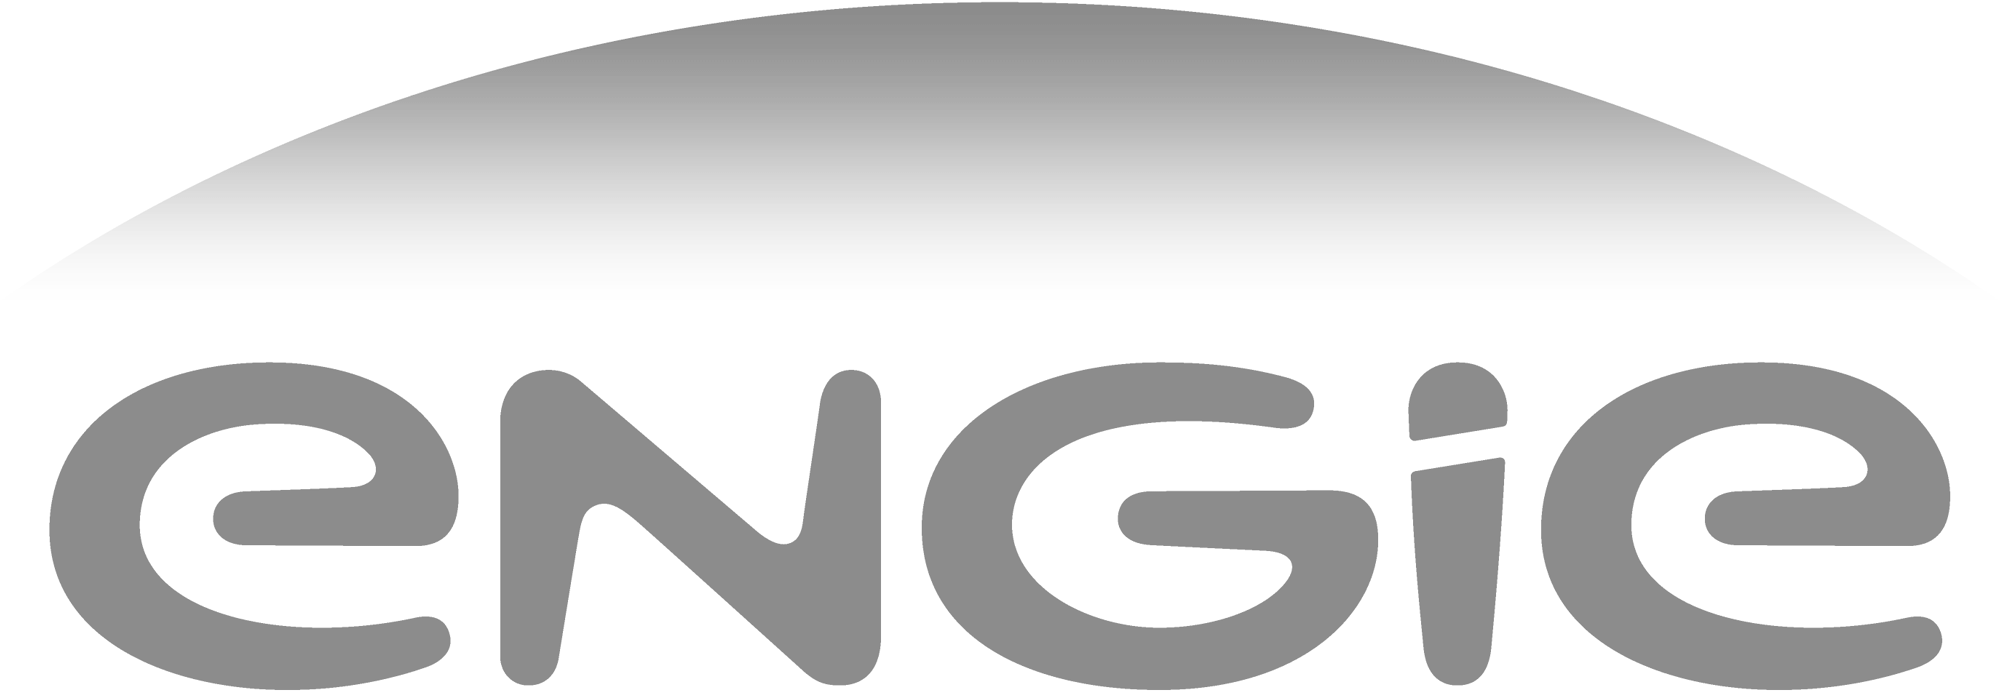 engie logo 2000 ConvertImage